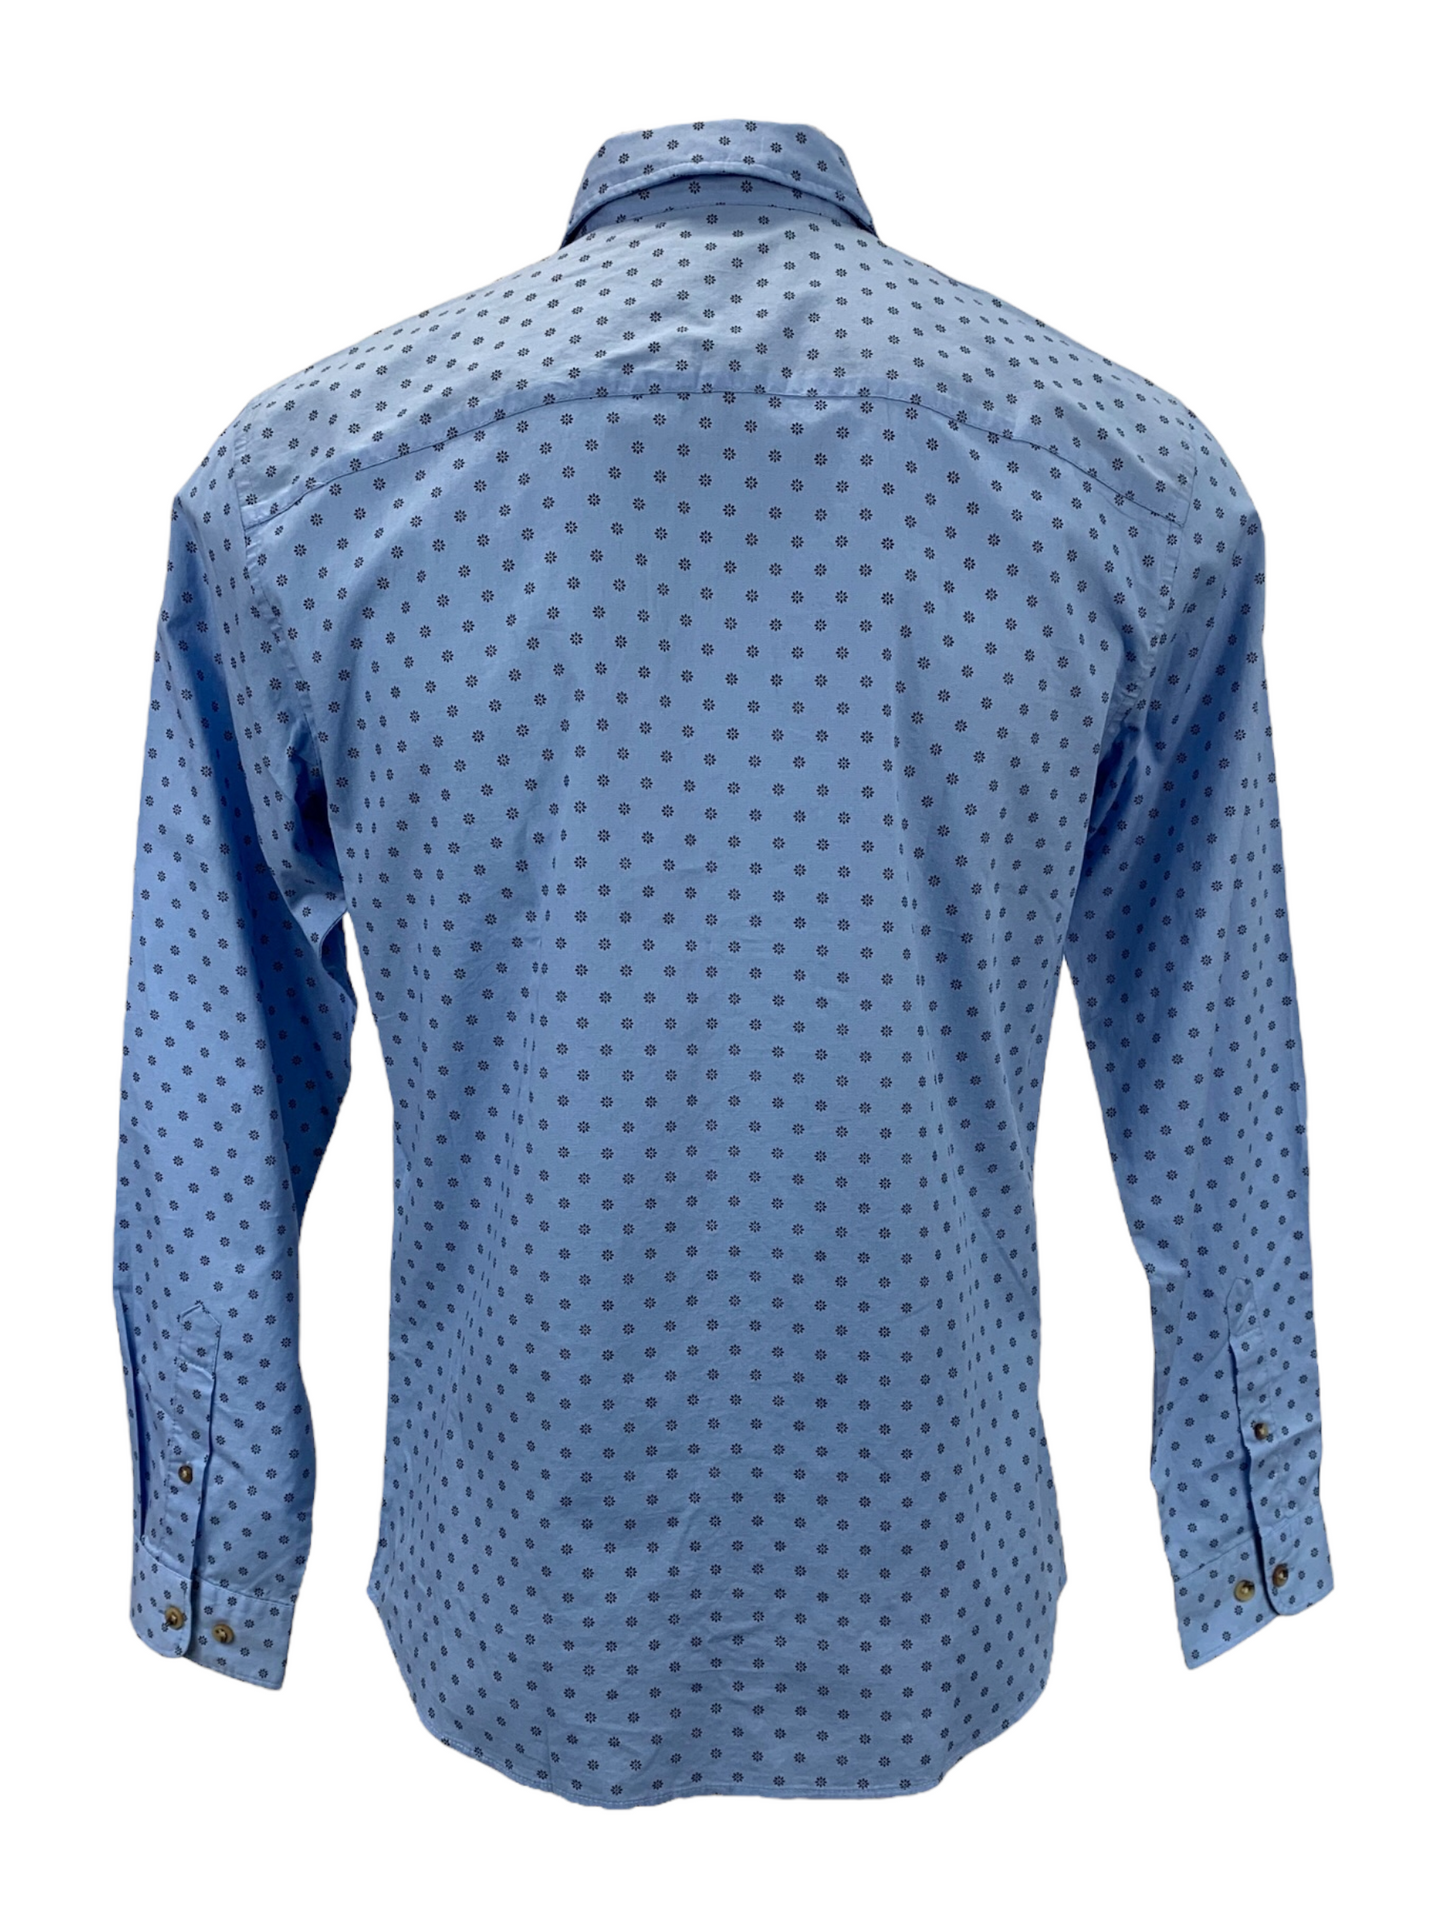 Jack&Jones men's patterned blue shirt